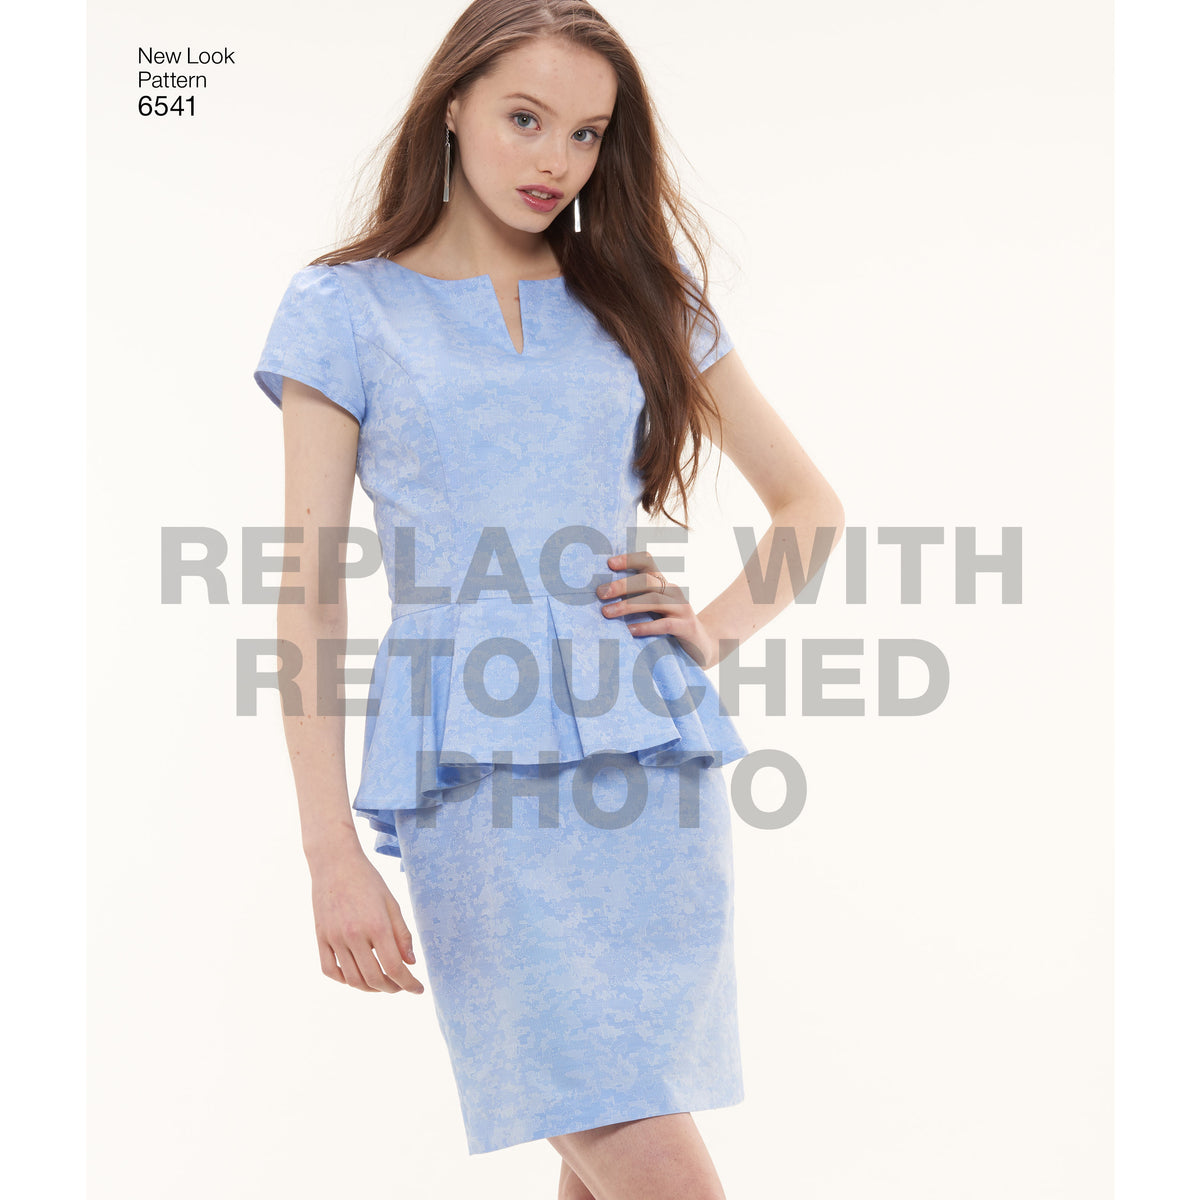 6541 New Look Pattern 6541 Misses' Peplum Dress